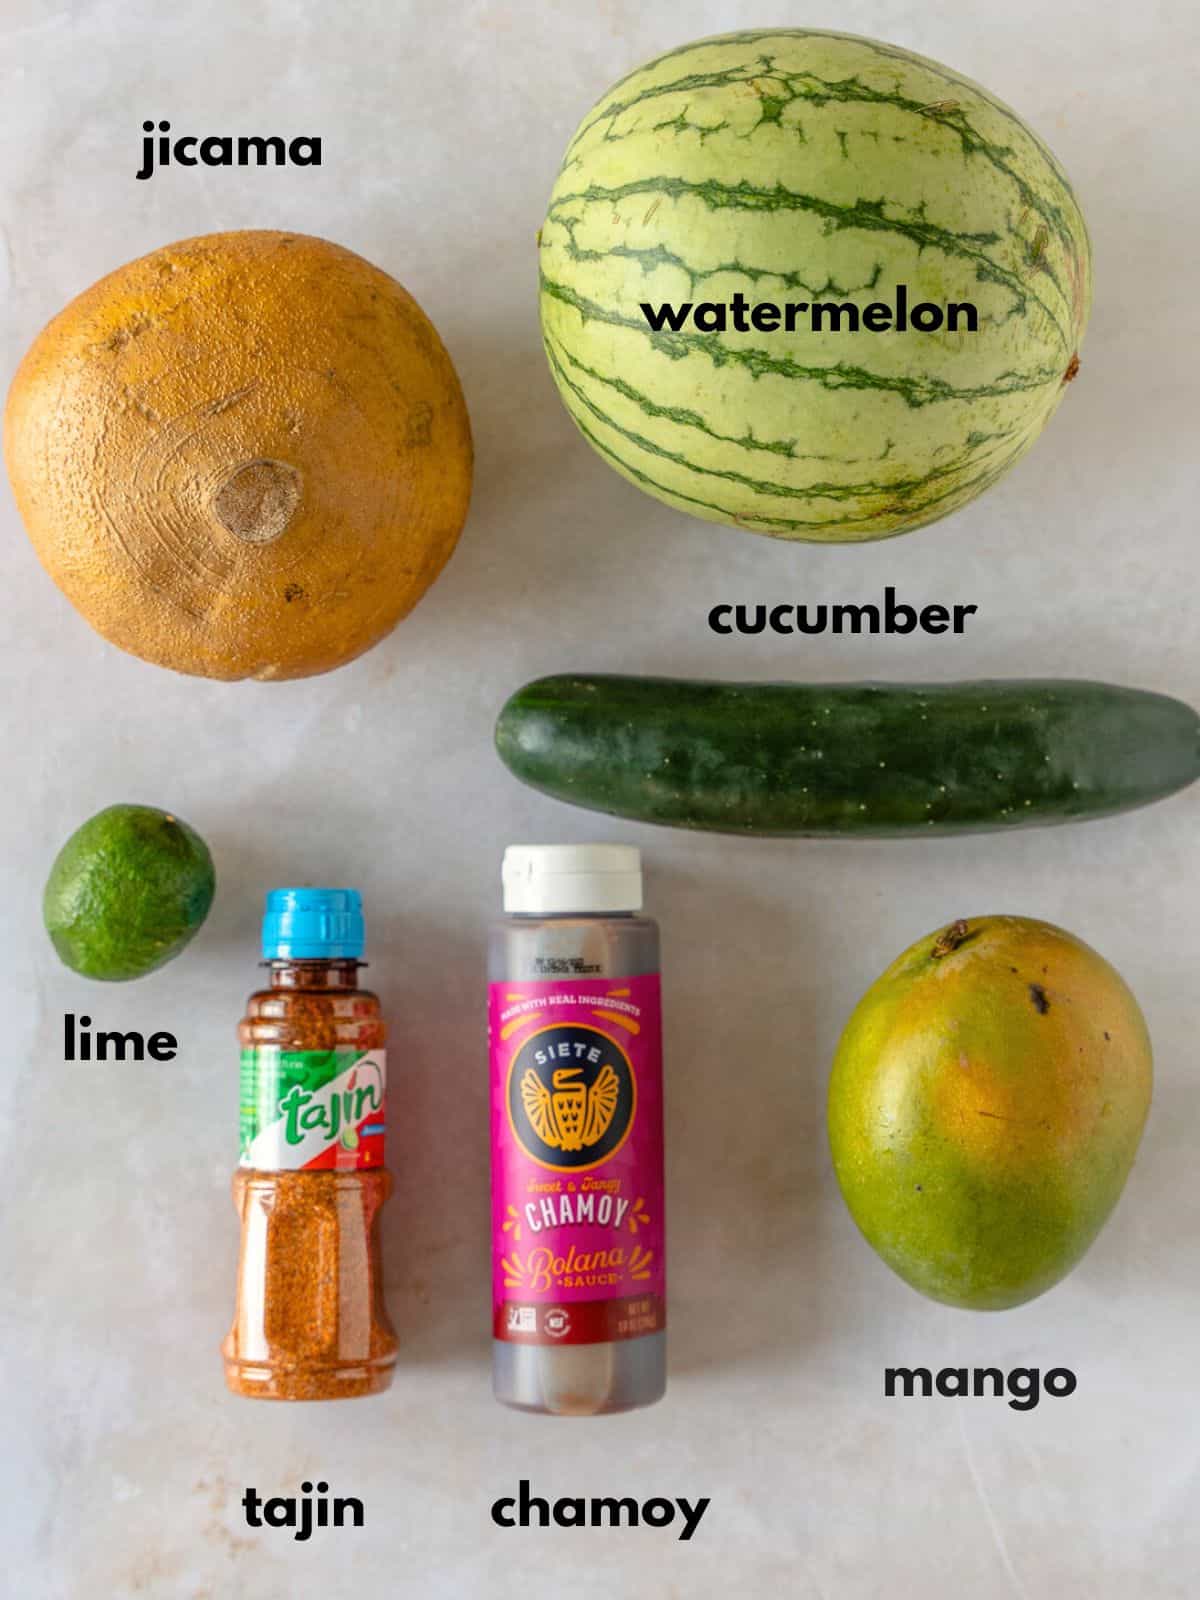 Text labeling the ingredients, jicama, watermelon, cucumber, lime, tajin, chamoy, and mango.